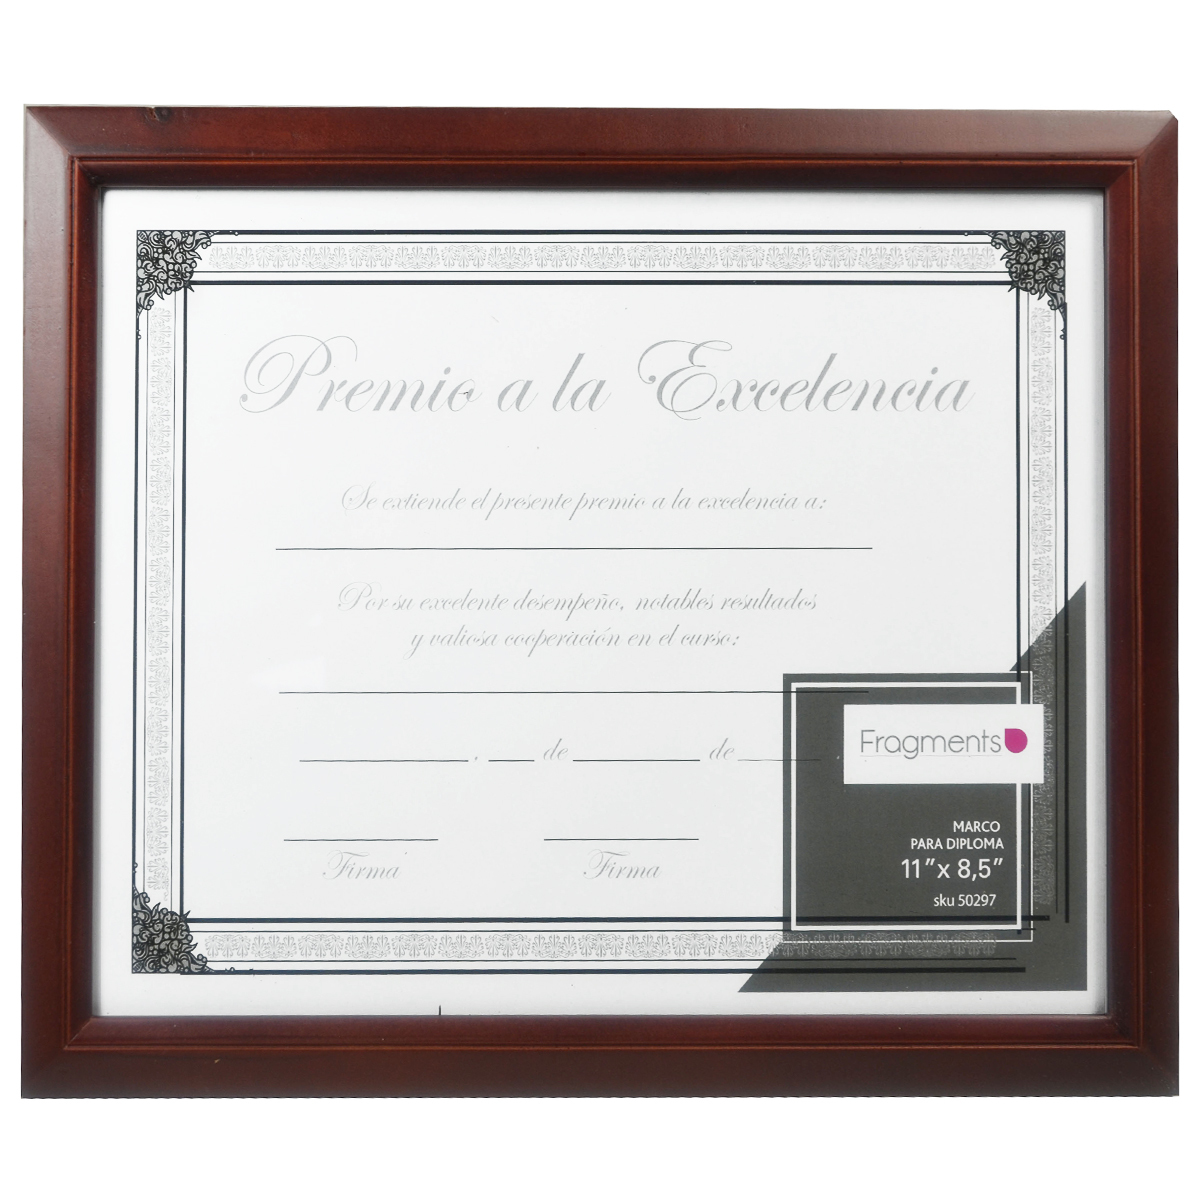 Marco para Diploma Fragments / Horizontal / Madera / 27.9 x 21.6 cm / Café